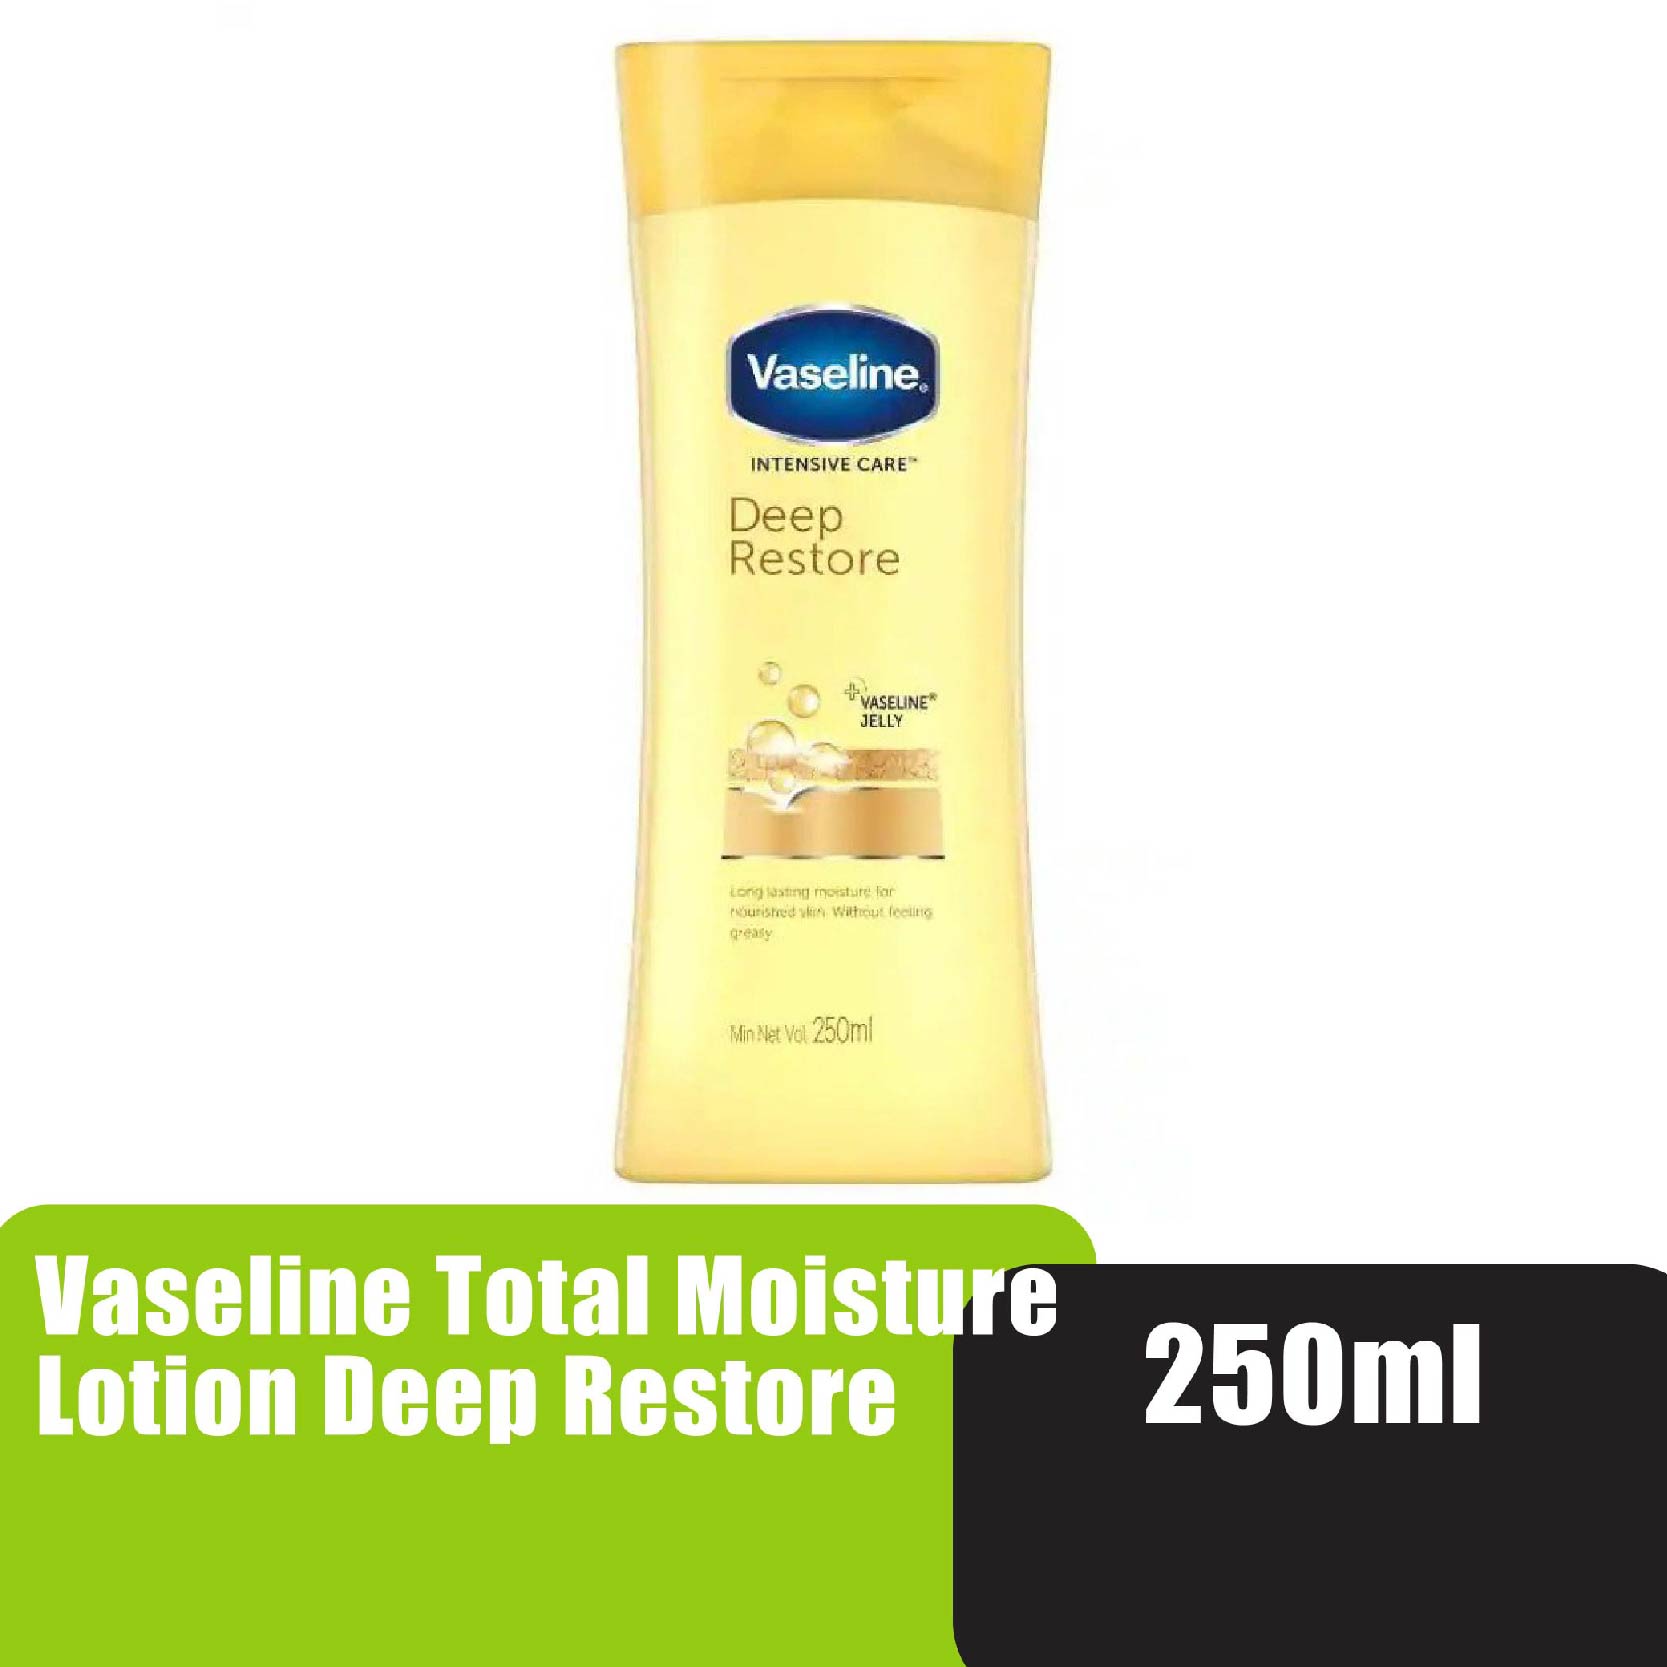 Vaseline Total Moisture Lotion 250ml - Deep Restore